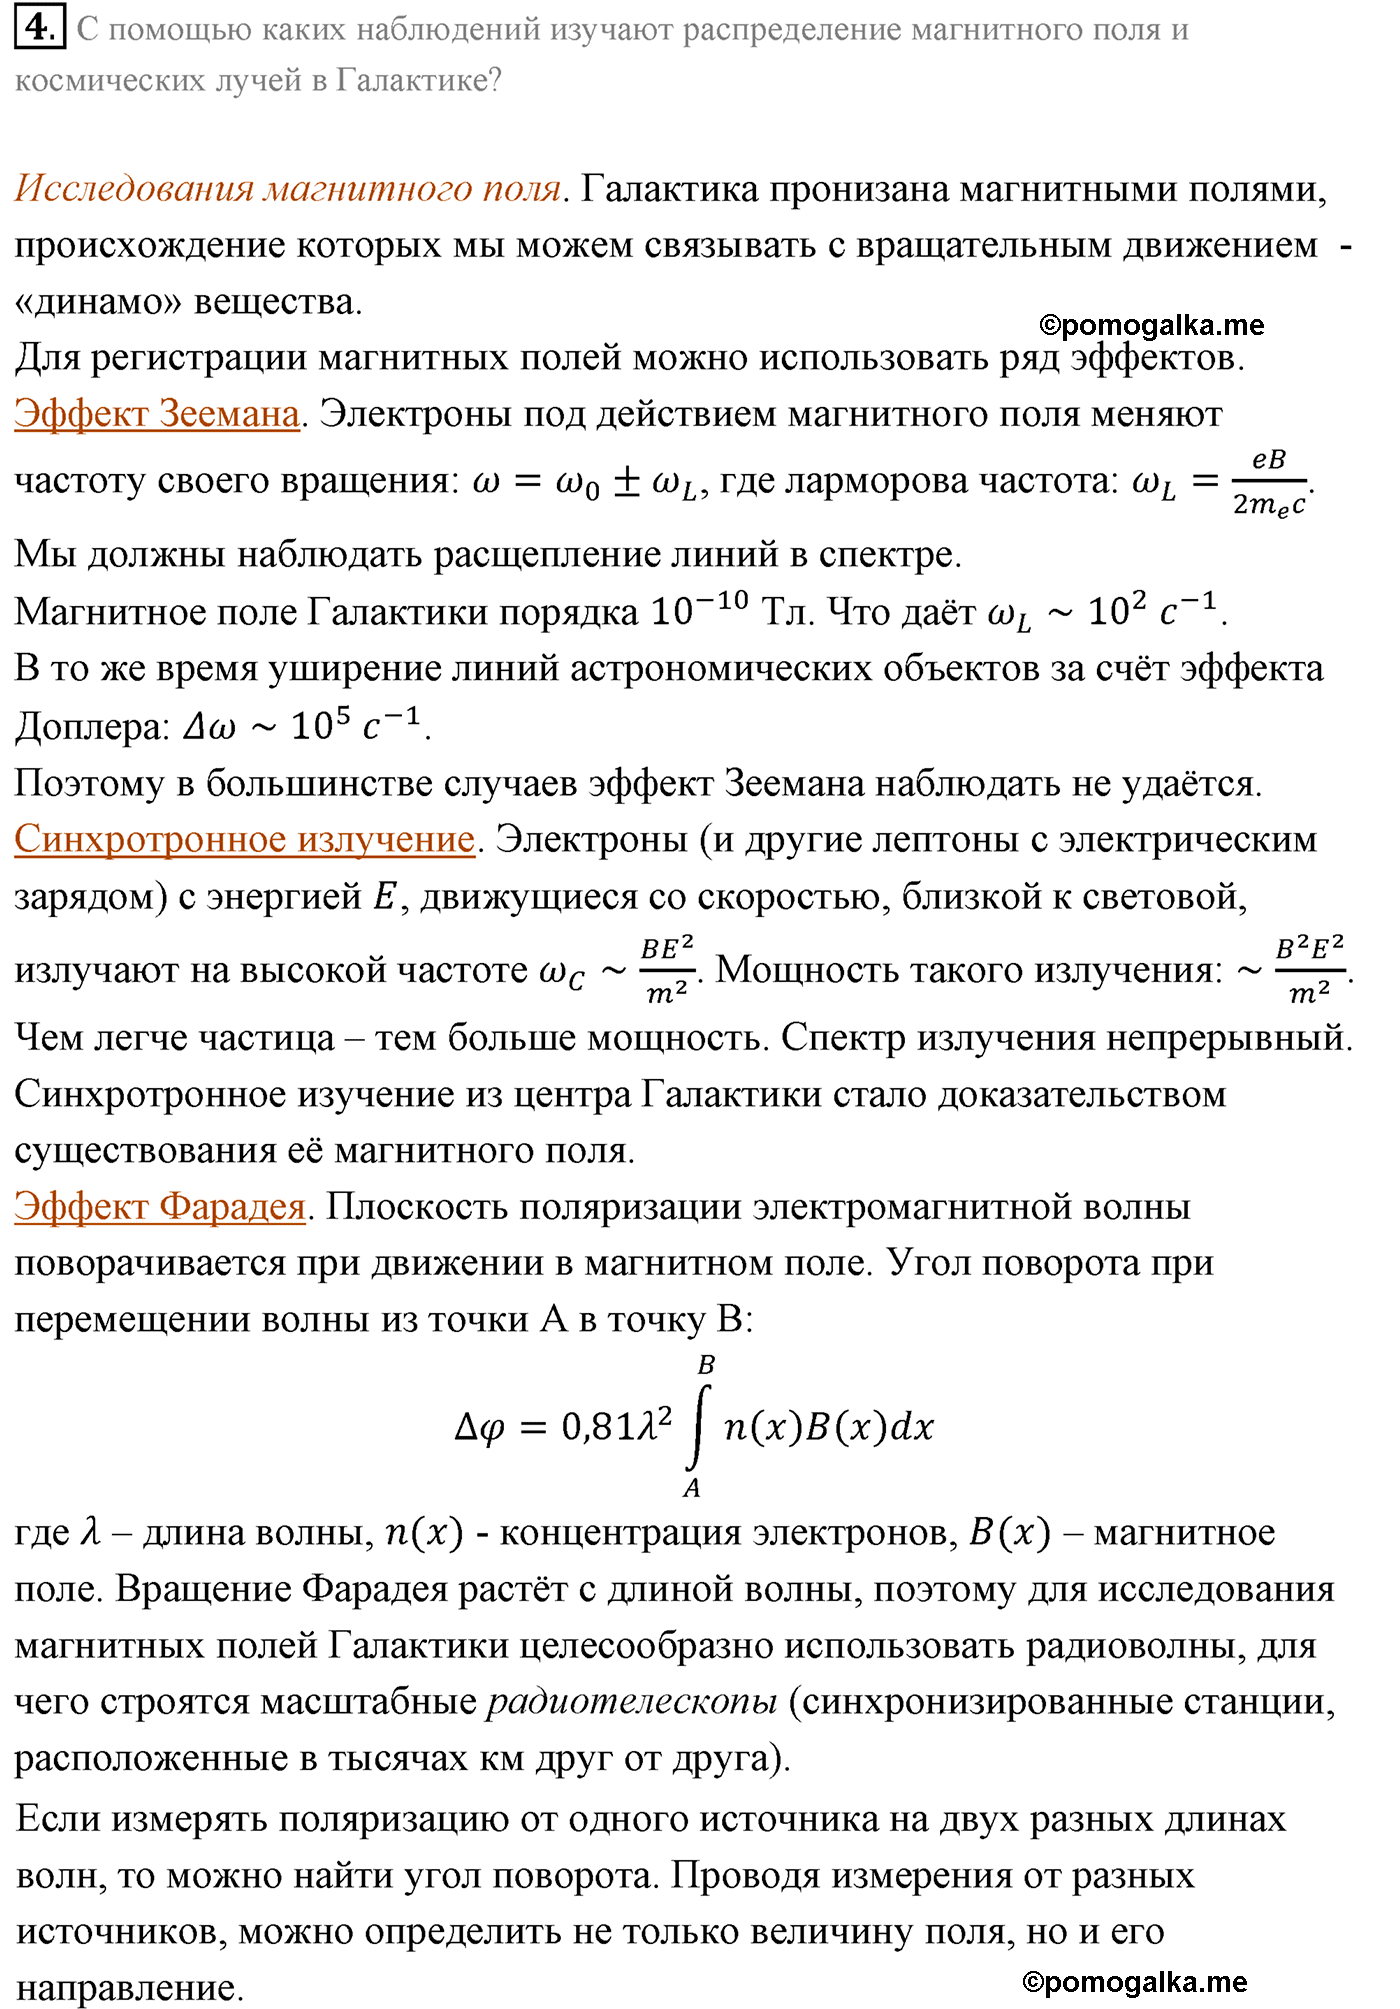 Параграф 106 вопрос №4 физика 11 класс Мякишев